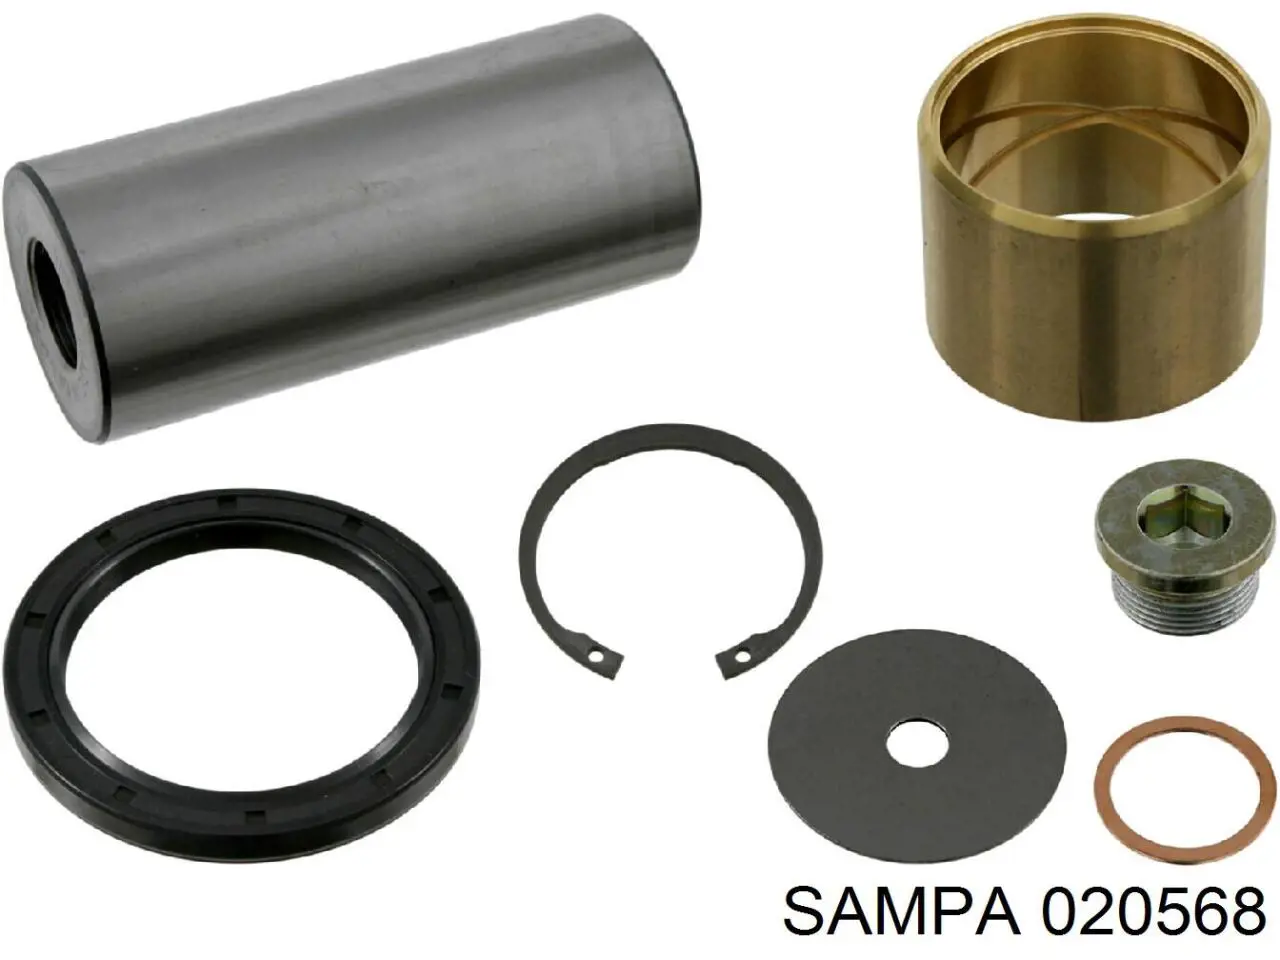 020568 Sampa Otomotiv‏ ремкомплект шкворня поворотного кулака